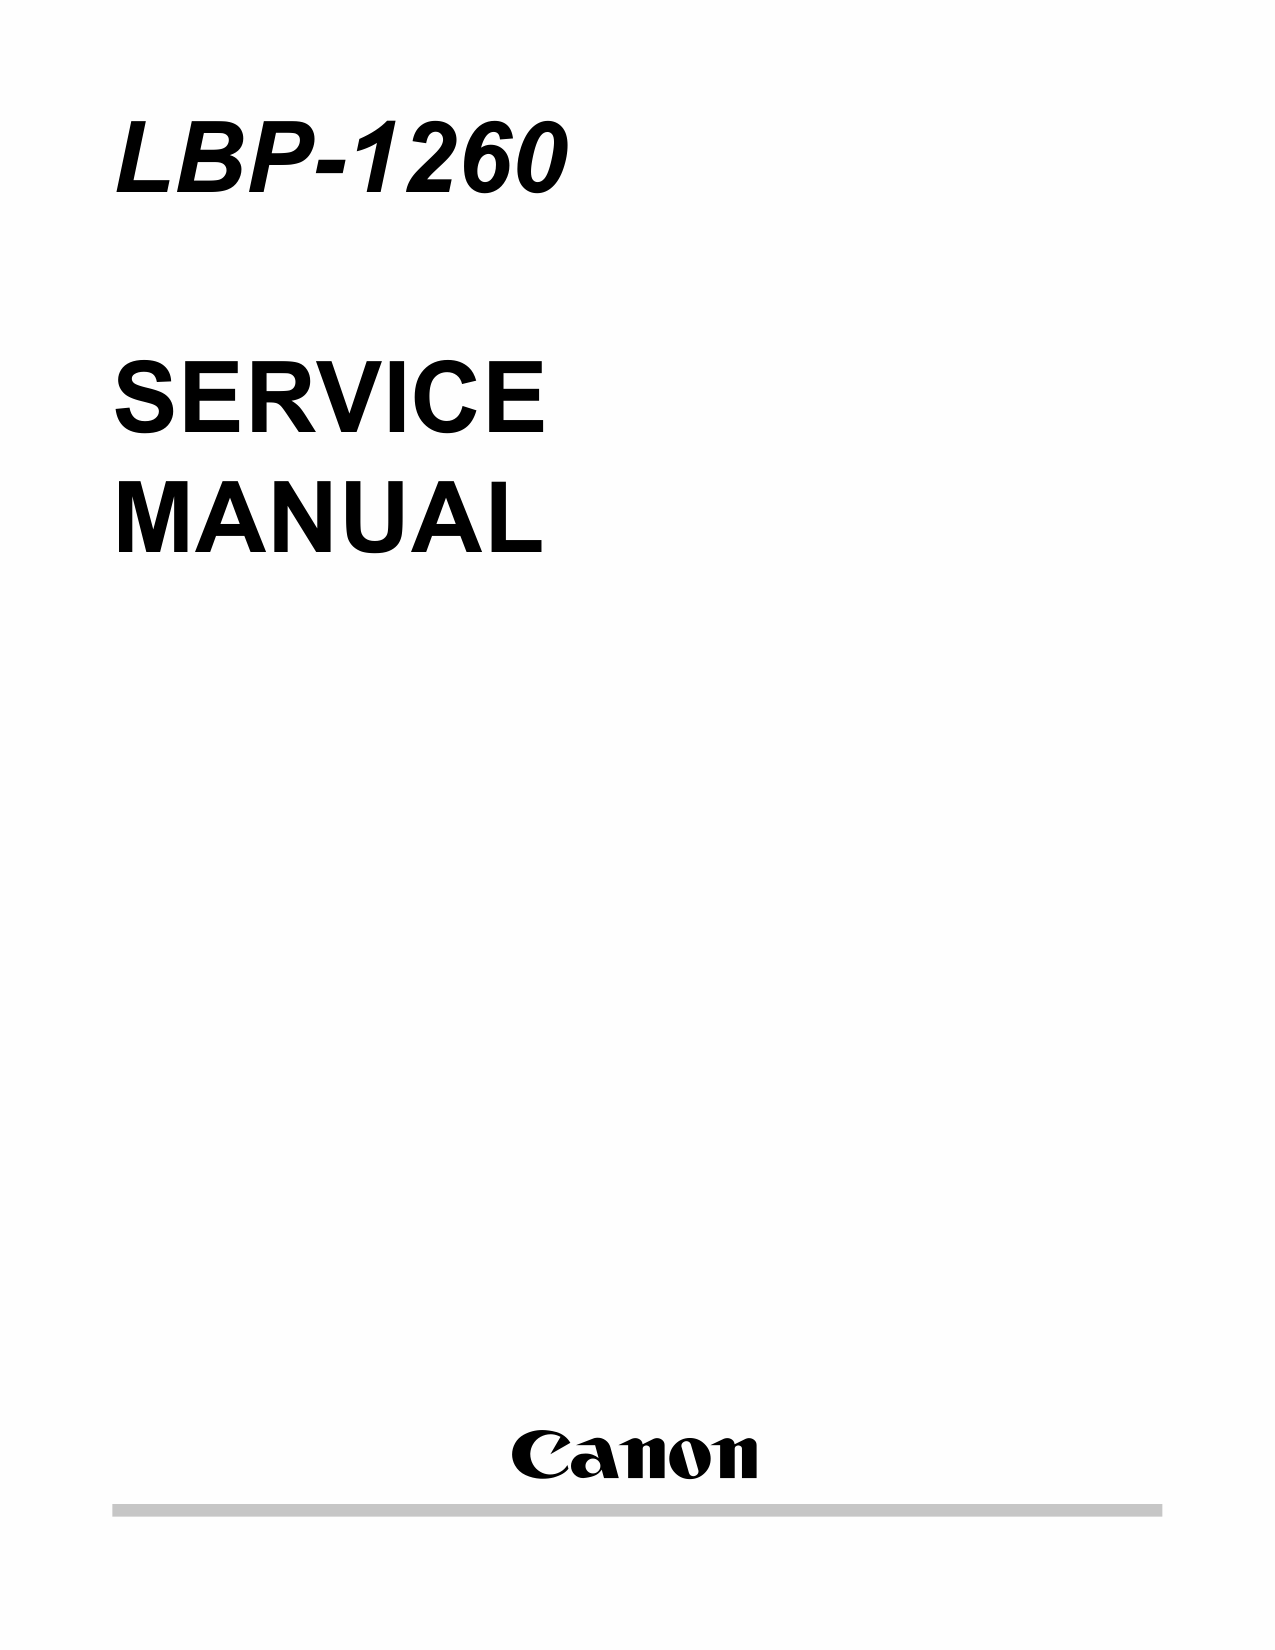 Canon imageCLASS LBP-1260 Service Manual-1